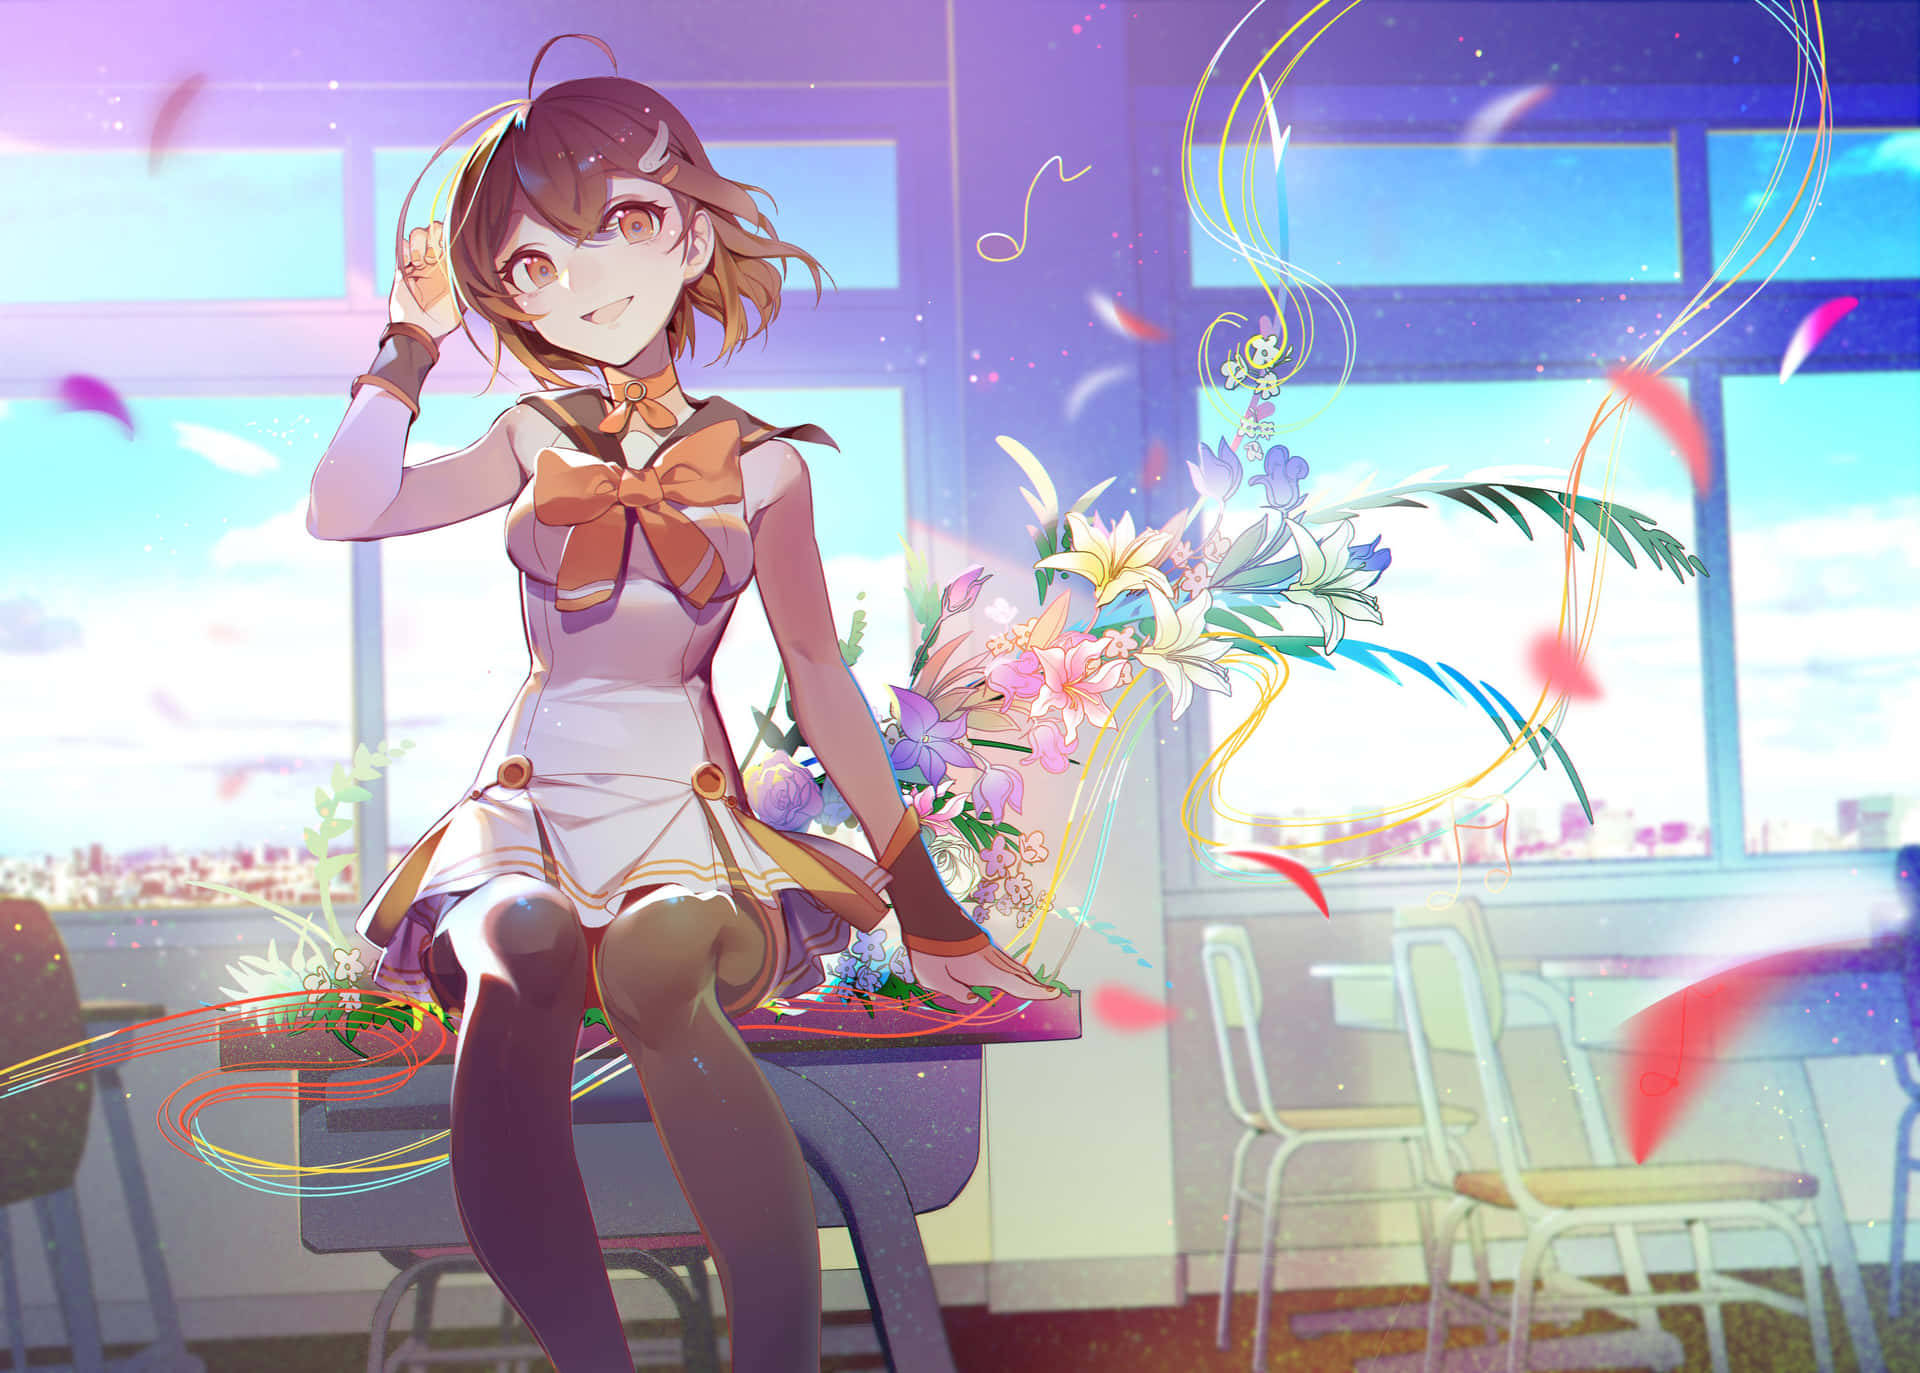 100+] Anime School Backgrounds